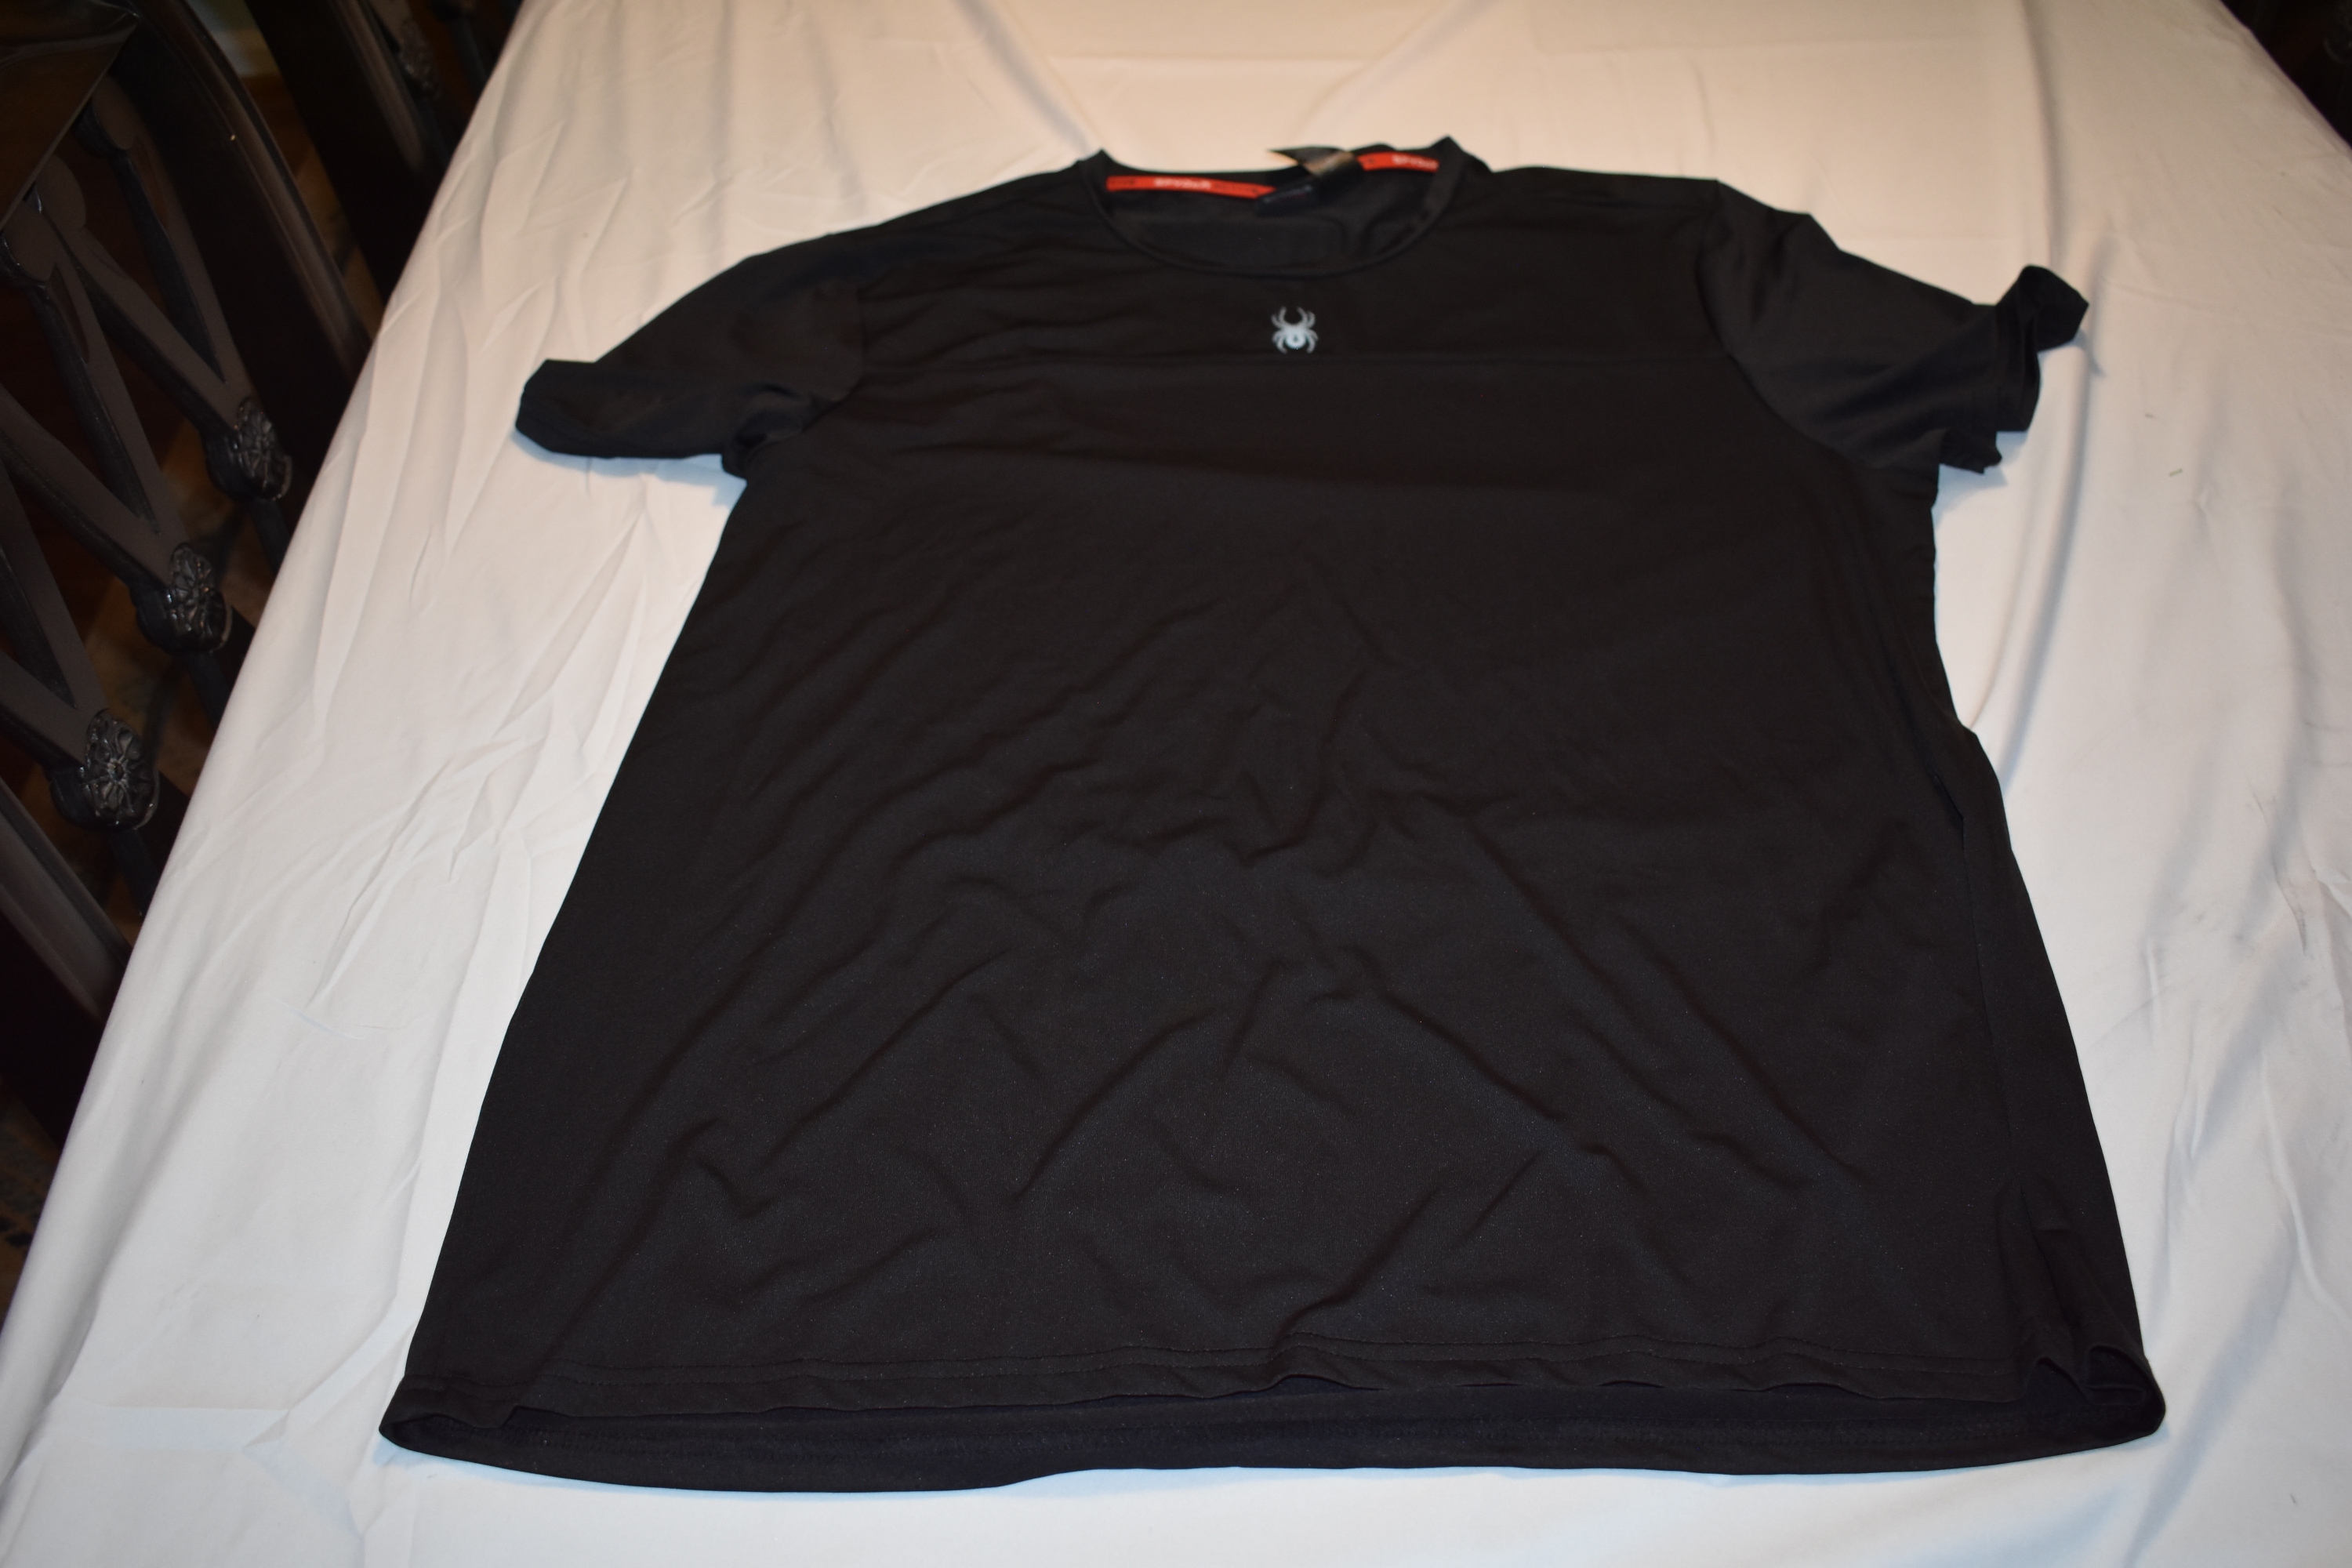 Spyder Active ProWeb Shirt, Black, Adult XXL - New Condition!